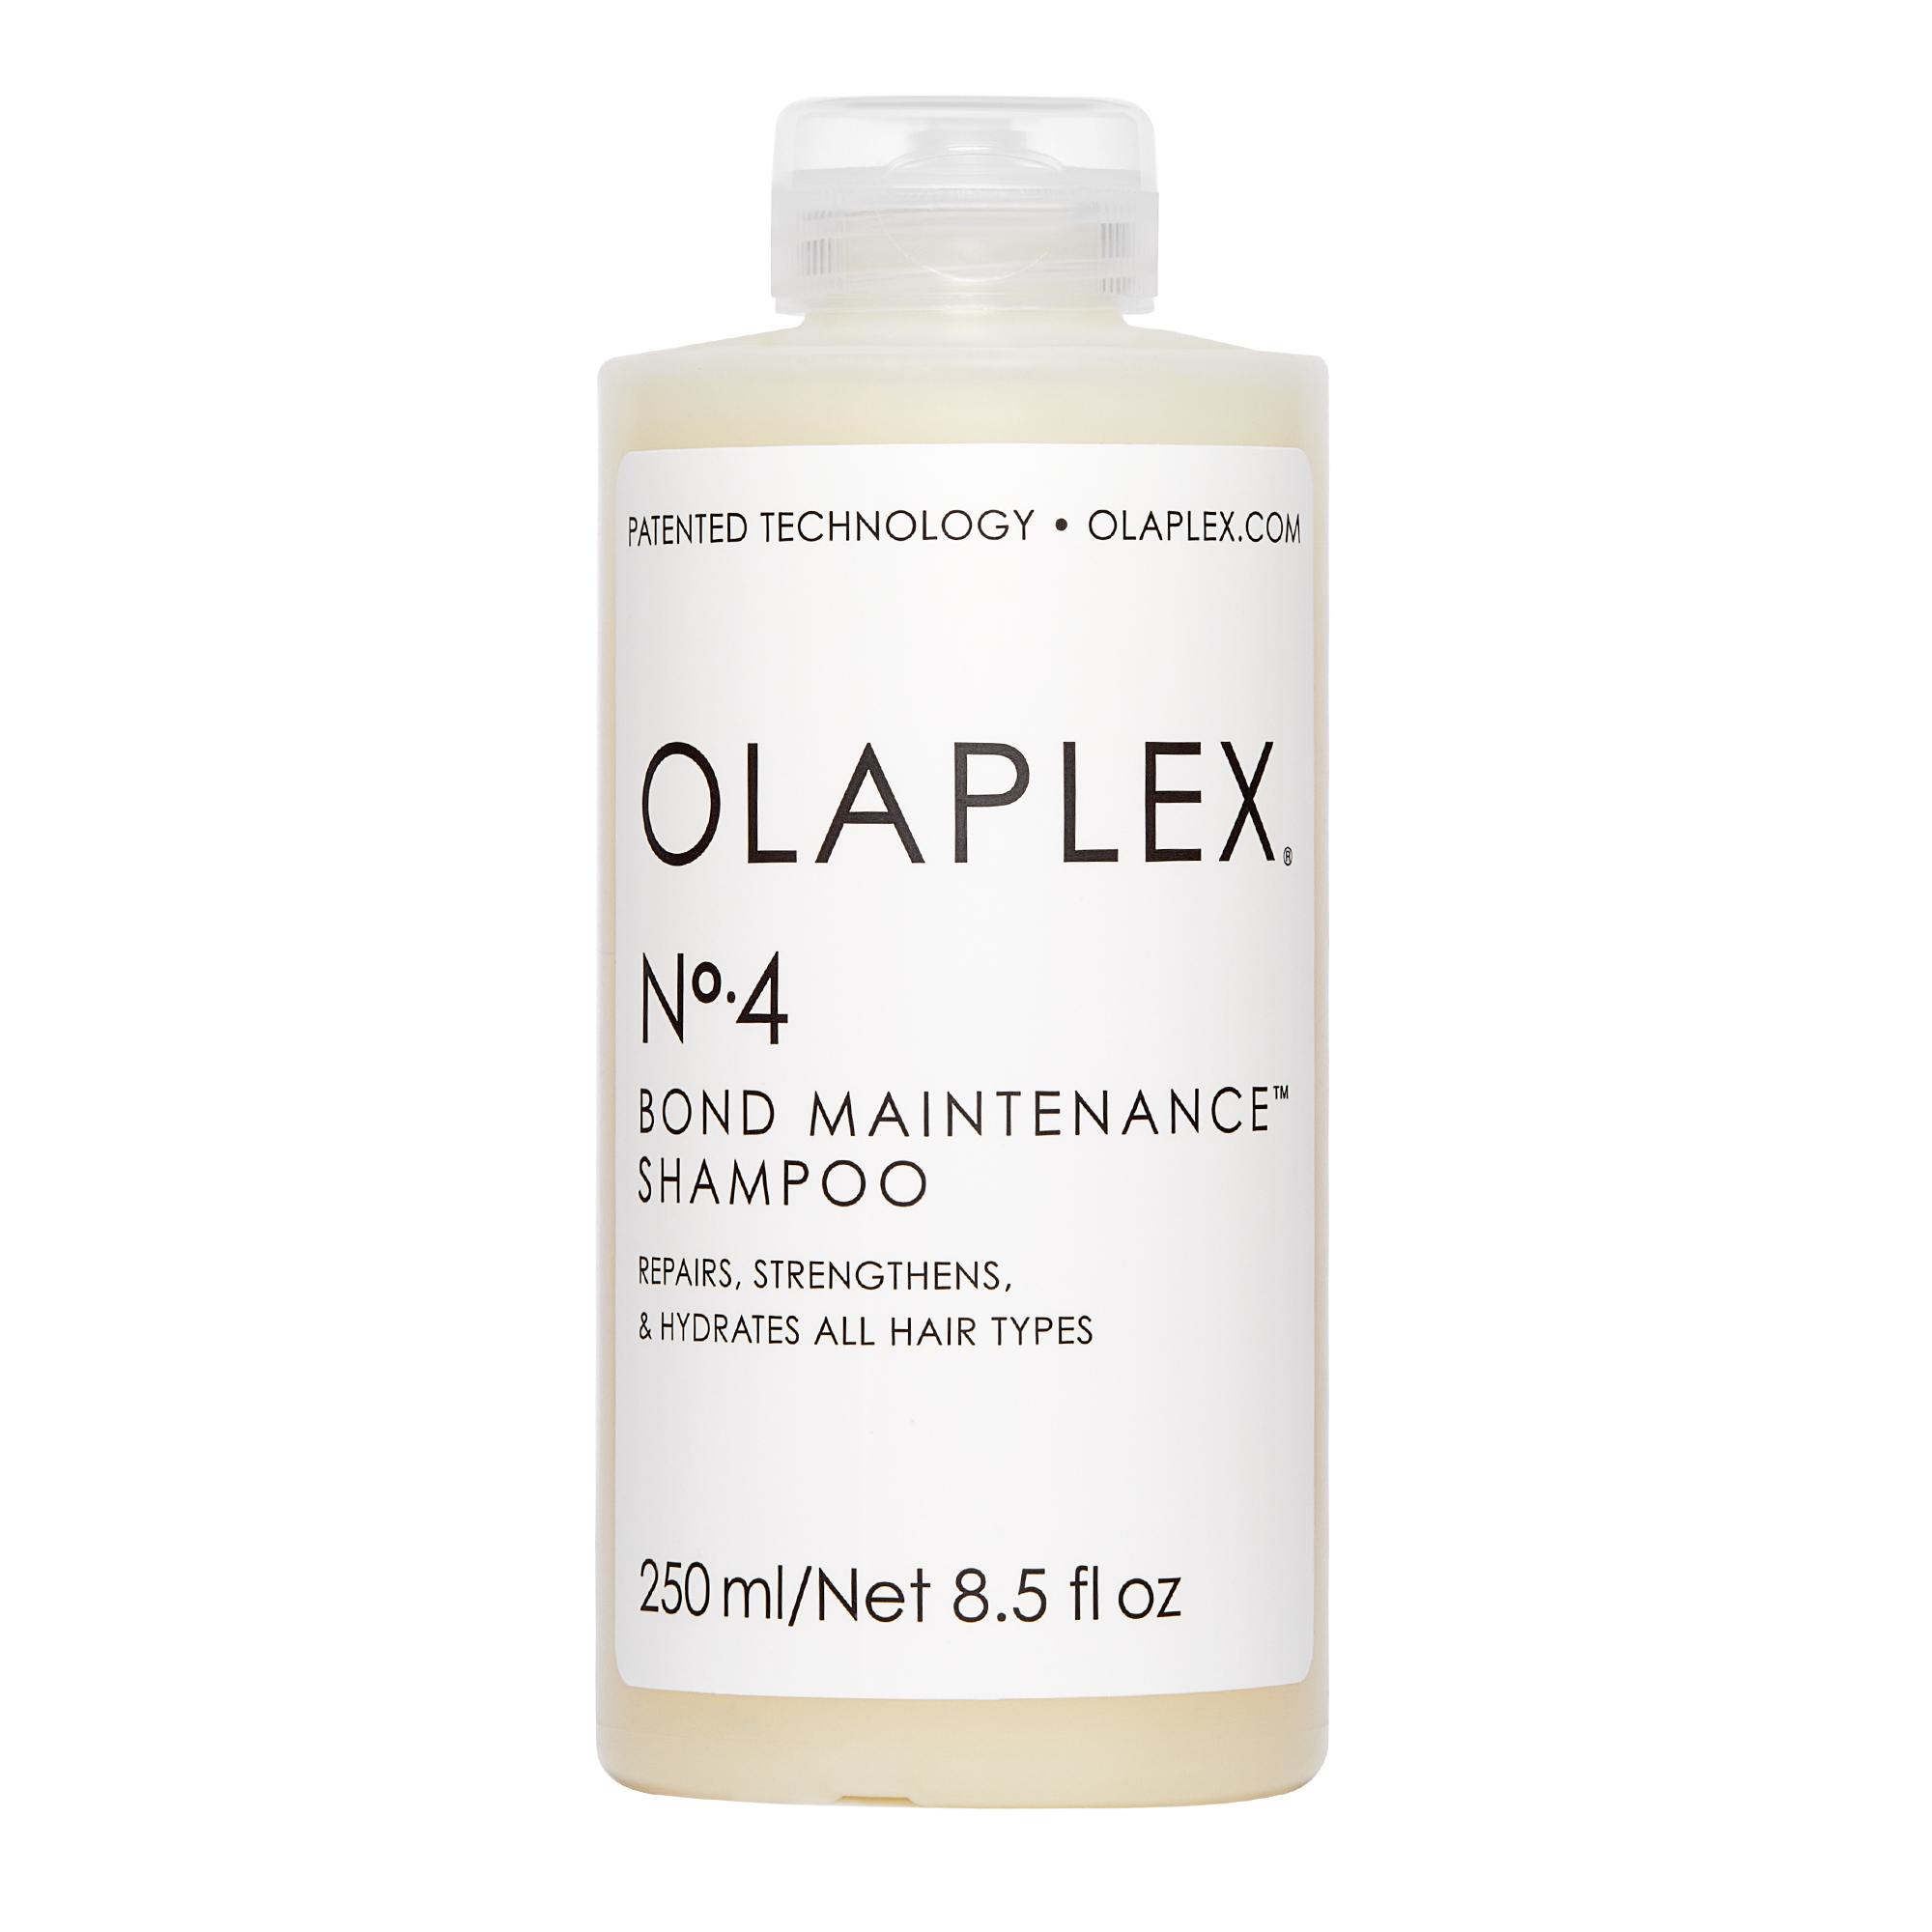 Original OLAPLEX® N°4 Bond Maintenance Shampoo grid image